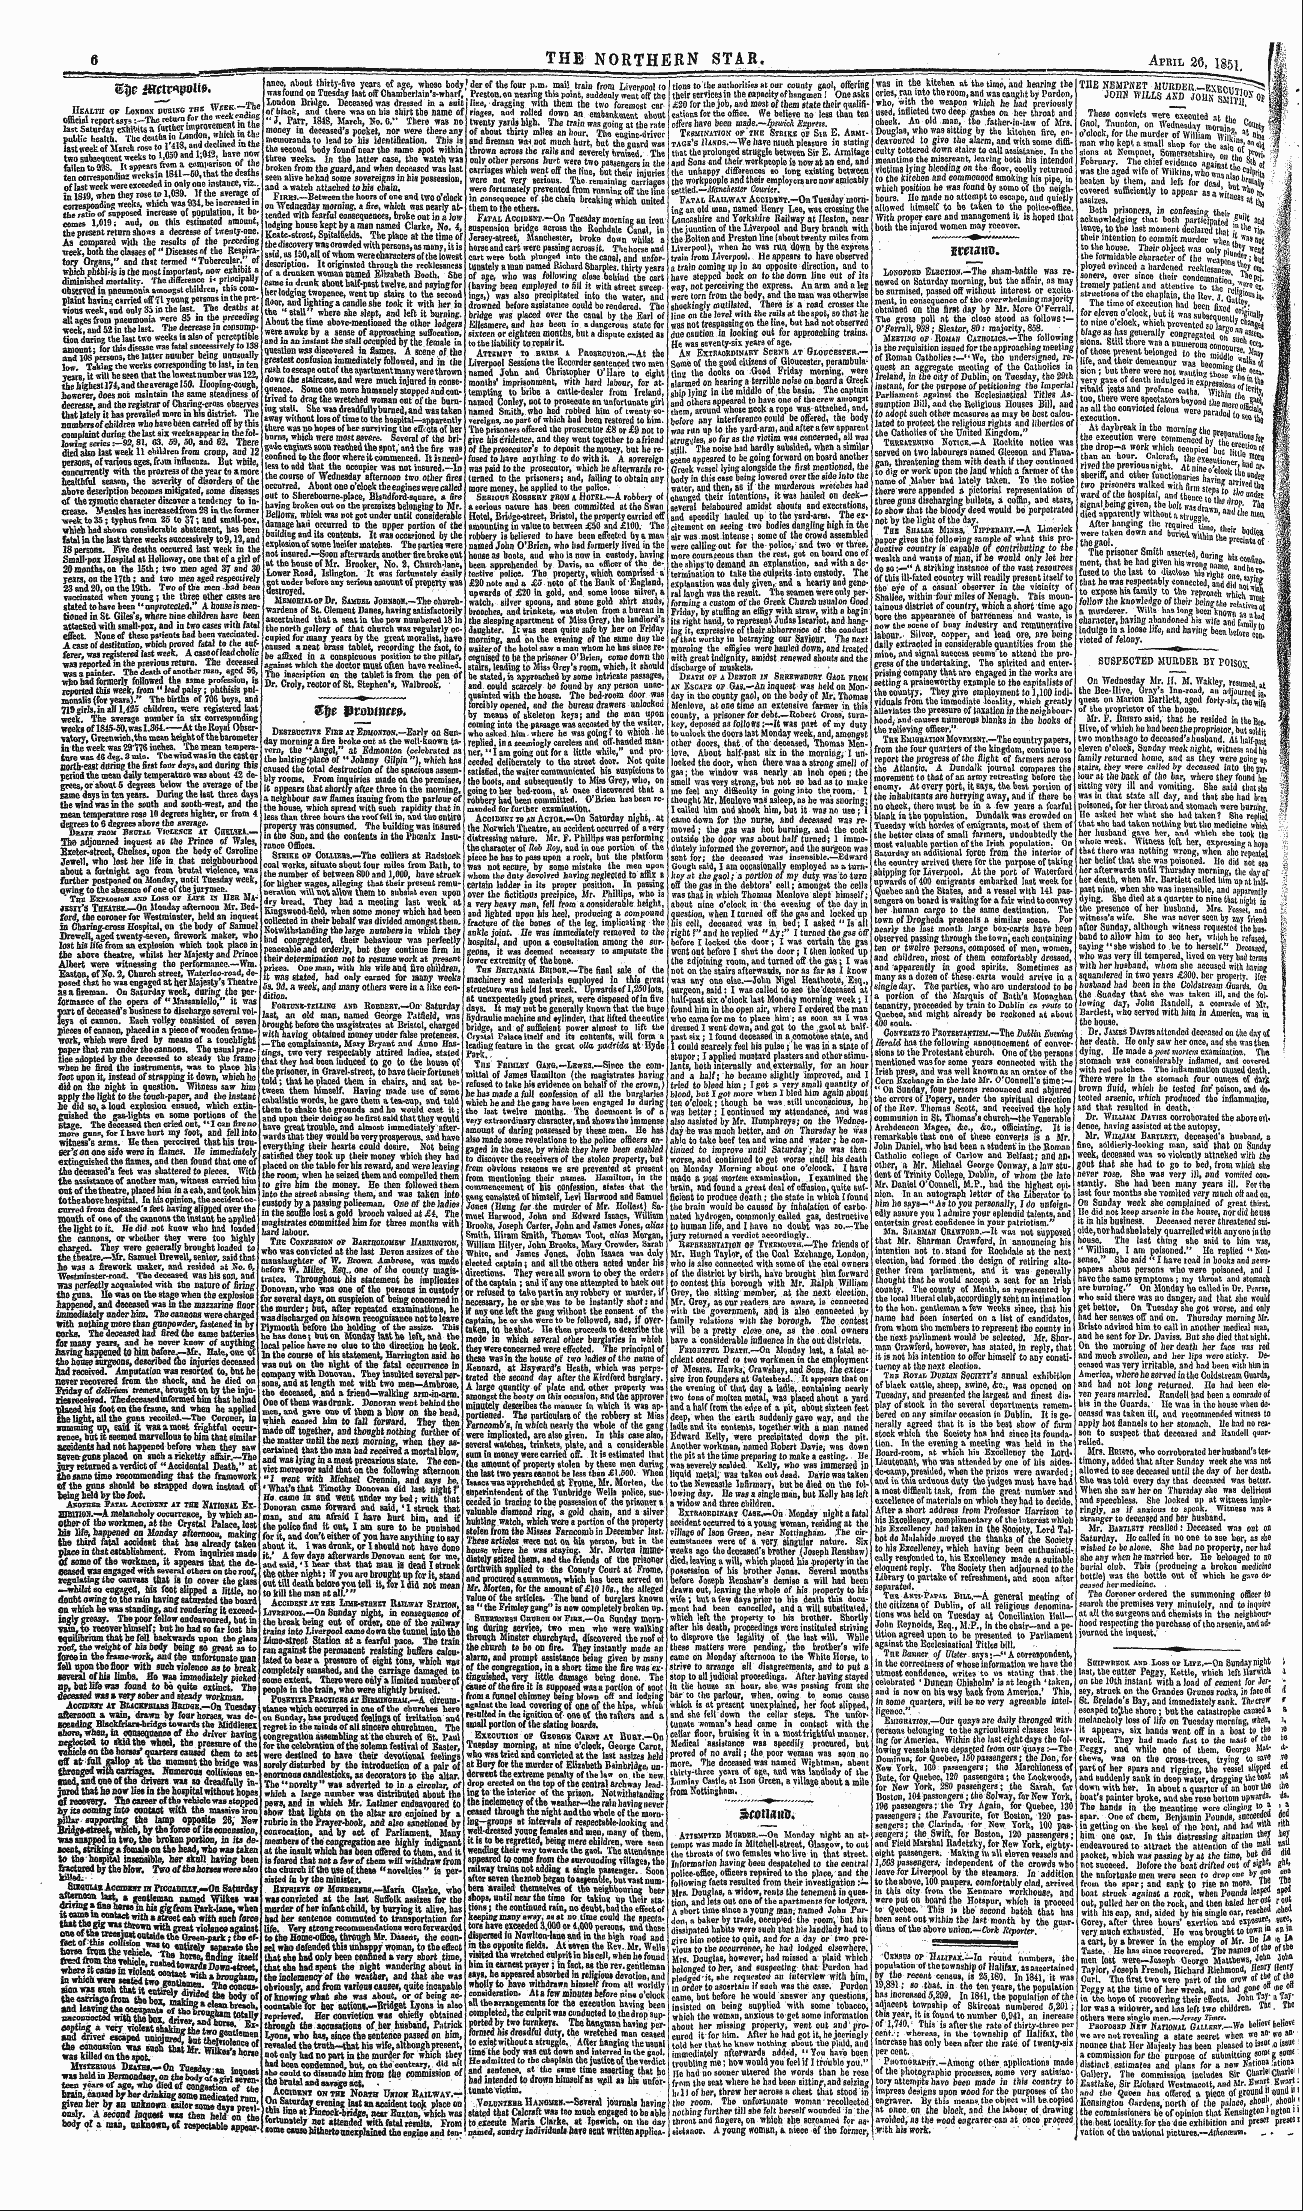 Northern Star (1837-1852): jS F Y, 2nd edition - &$E Urodmritf.